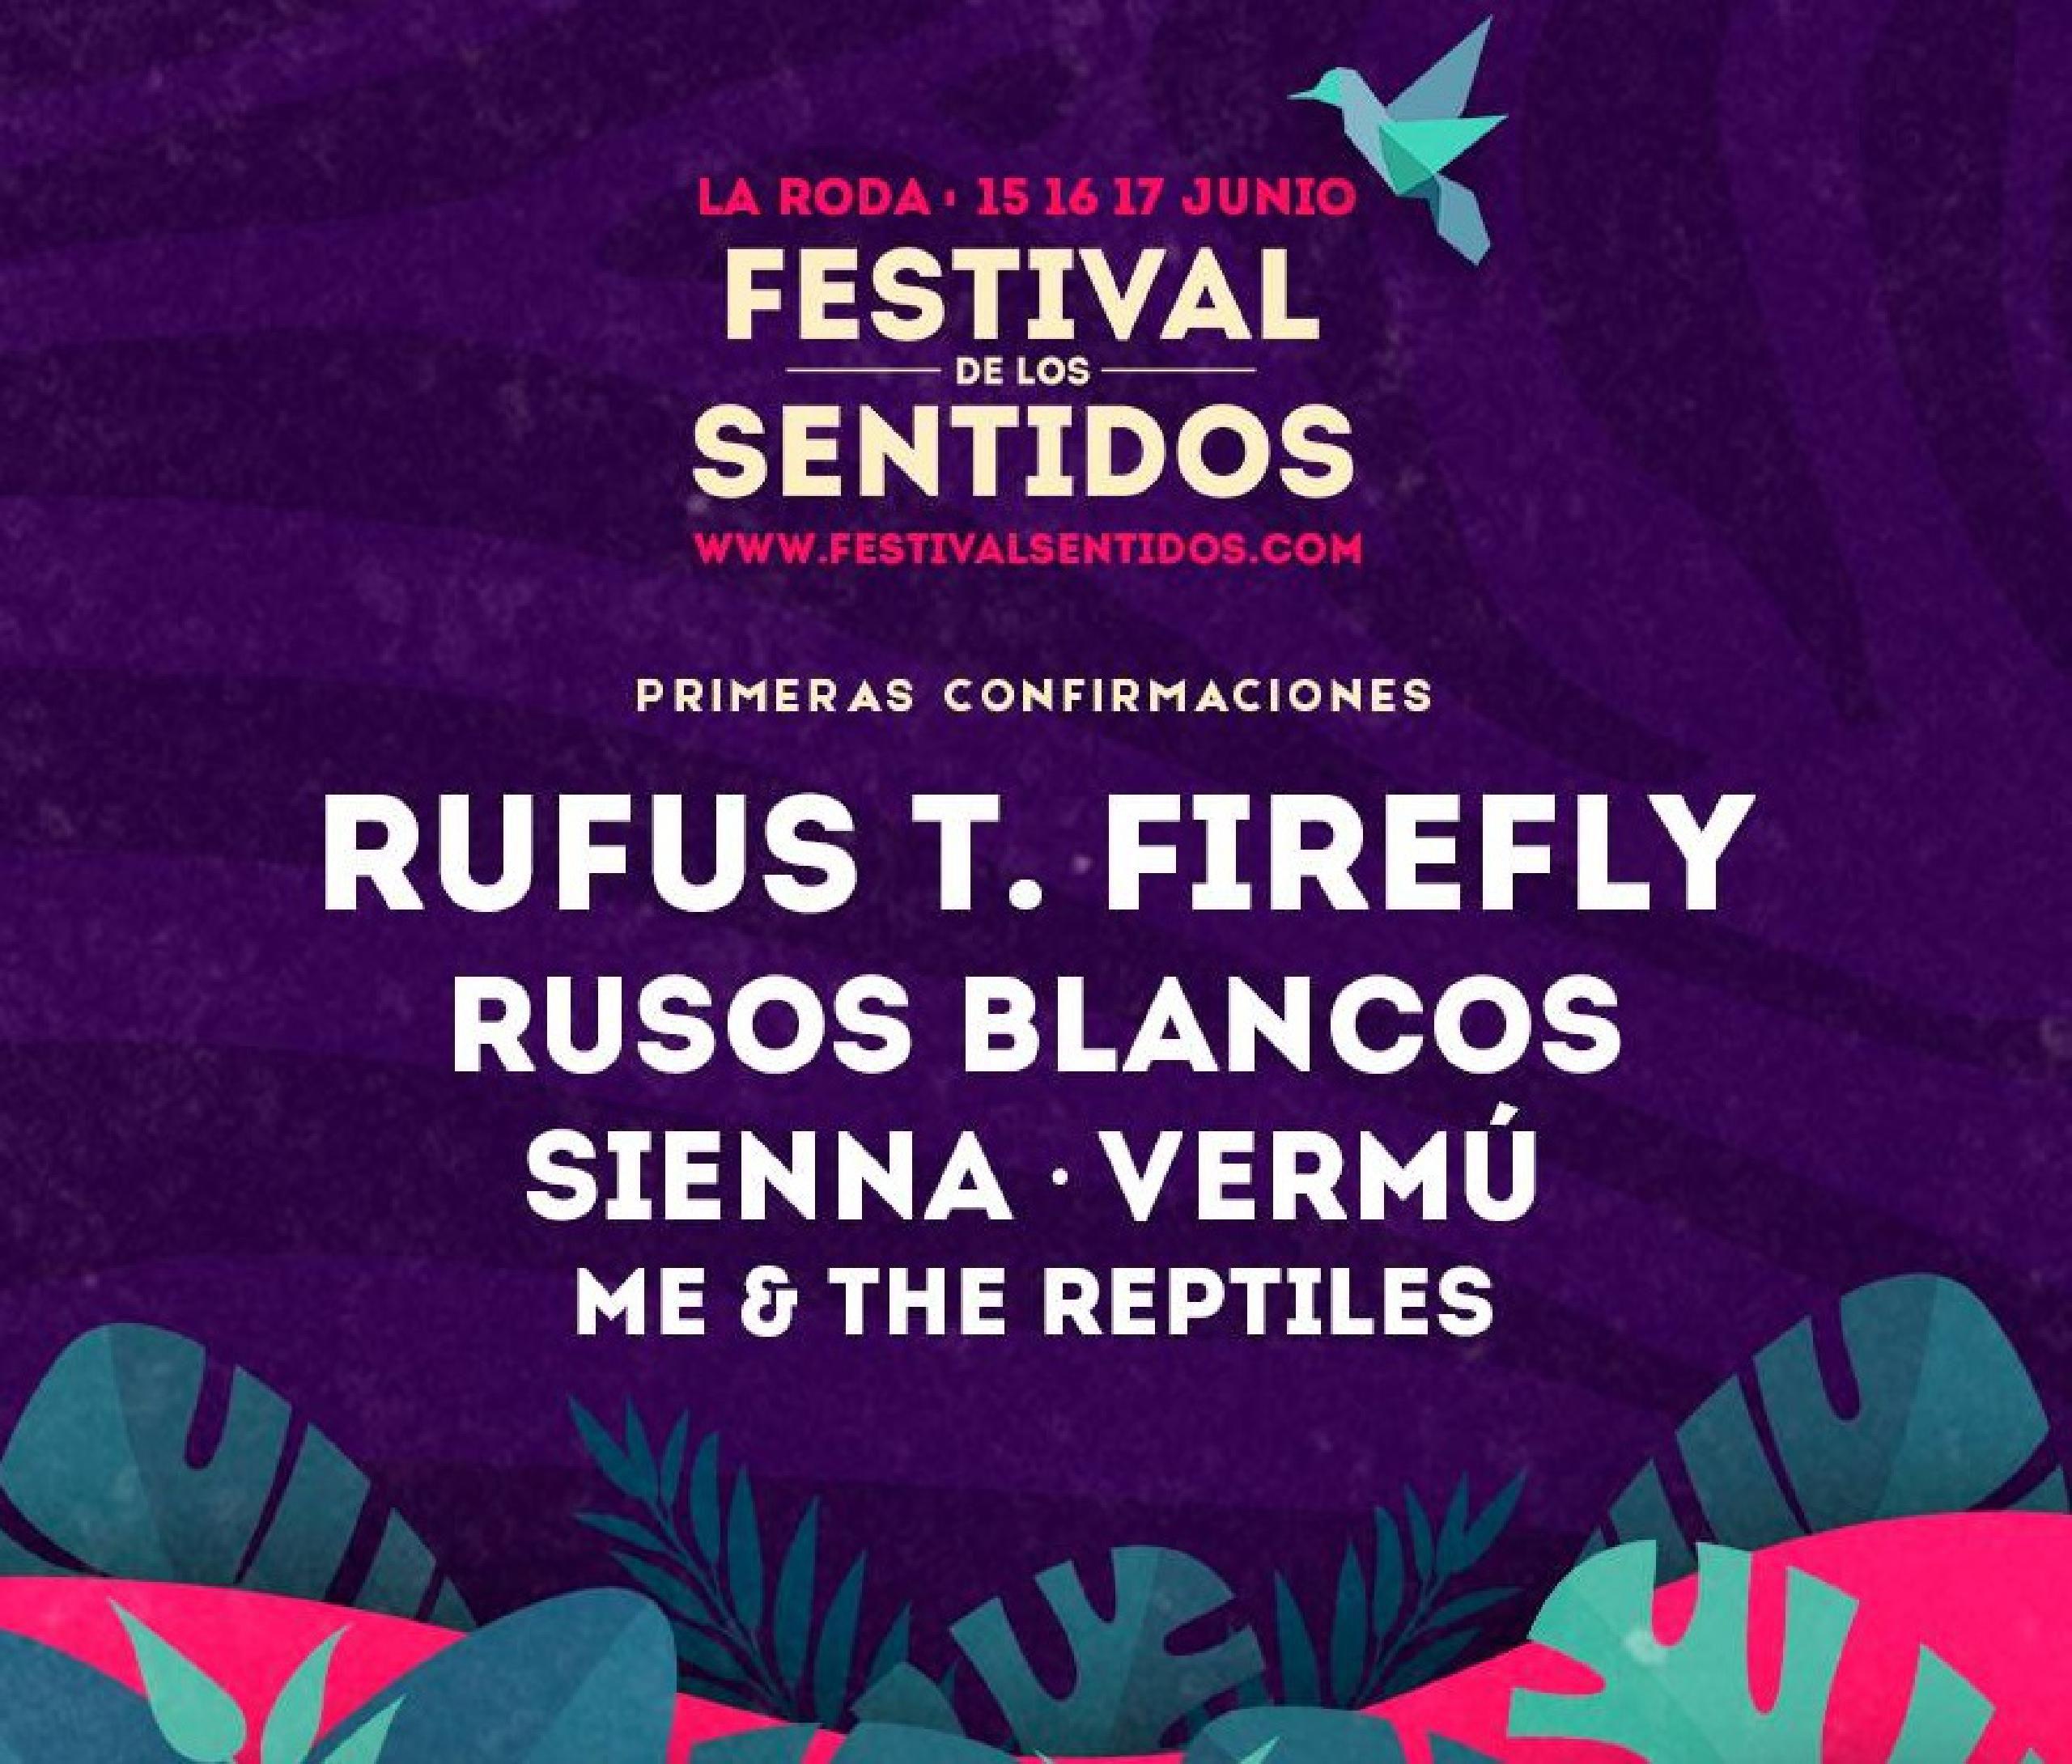 Festival de los Sentidos 2018. Tickets, lineup, bands for Festival